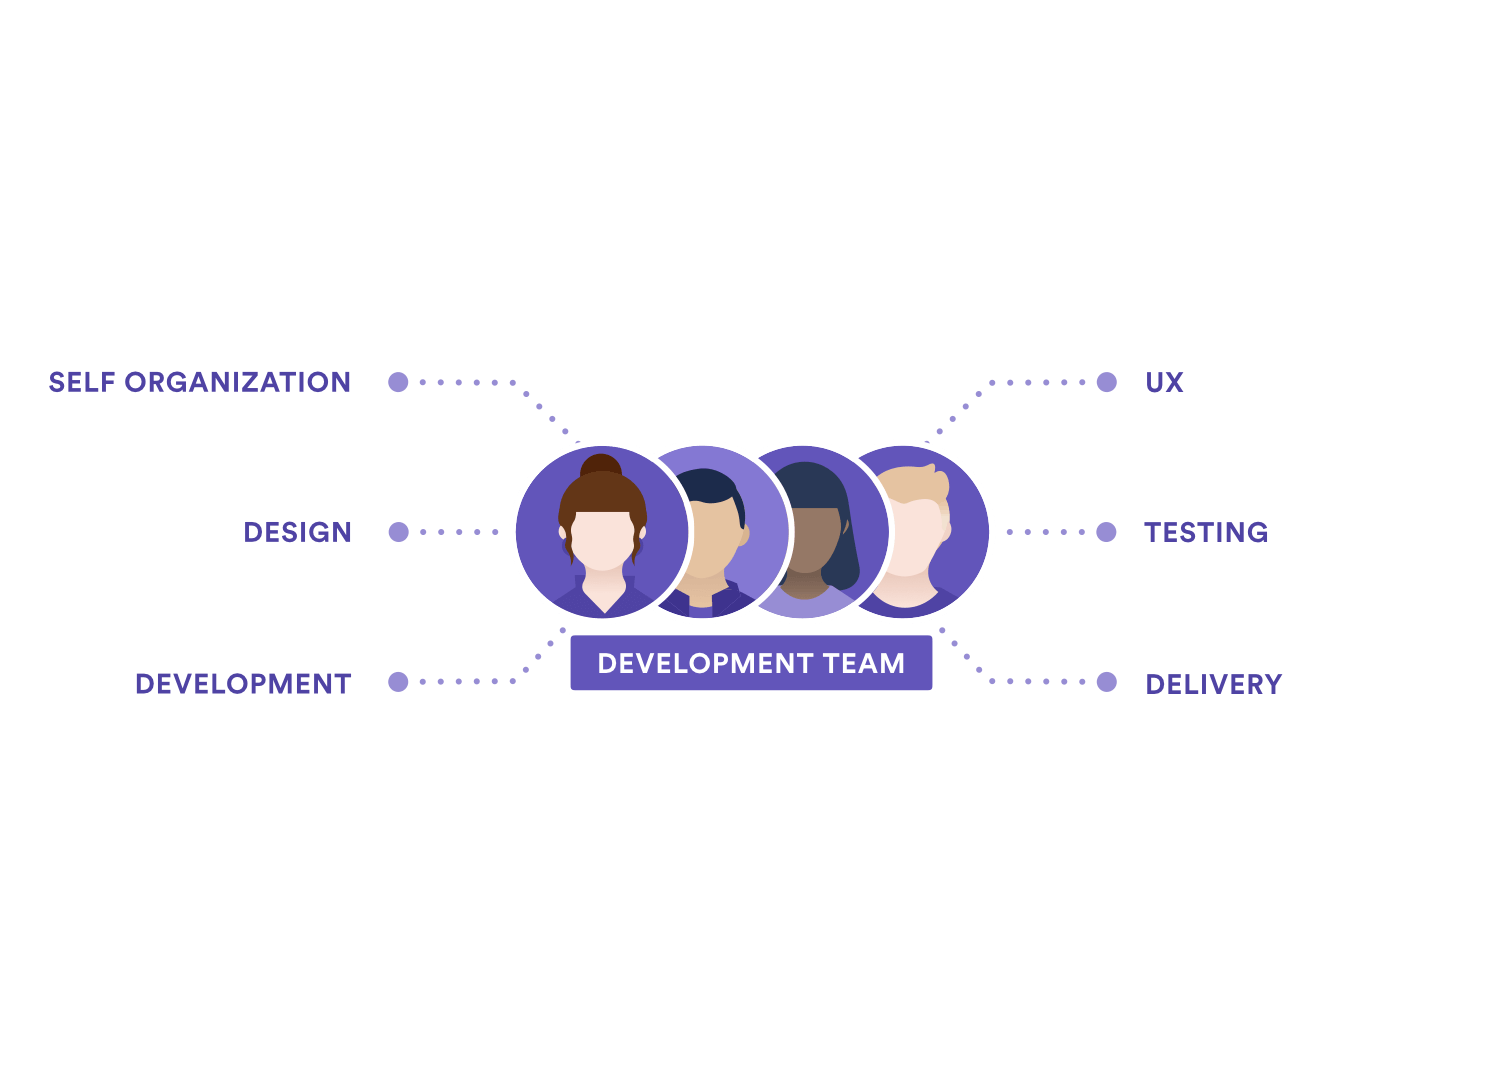 Ideal Software Development Team Size & Roles